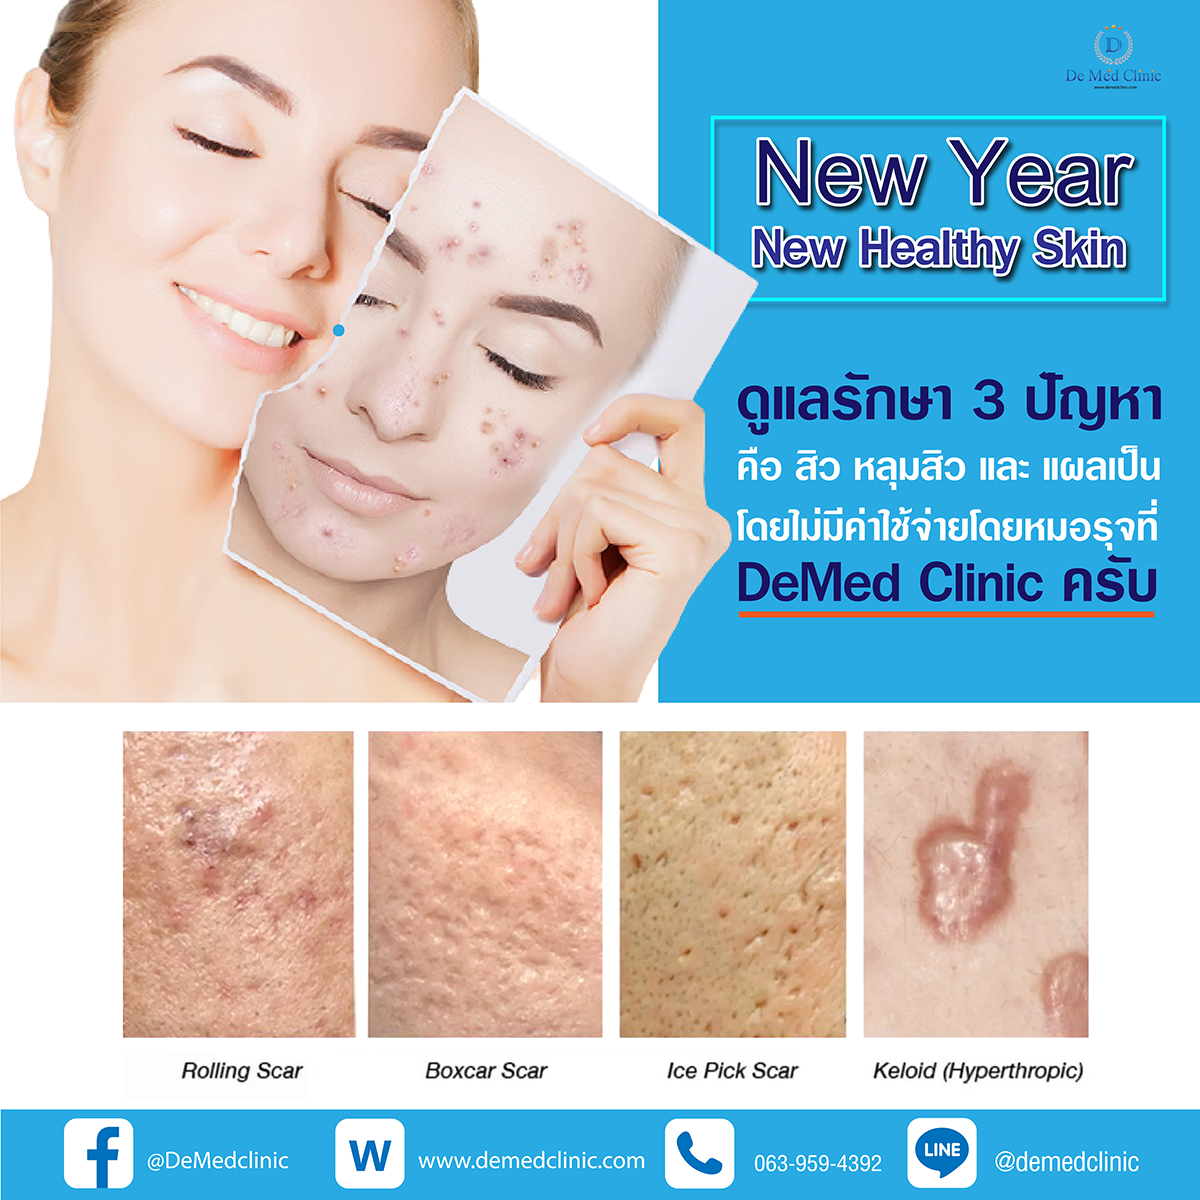 New Year New Healthy Skin ดูแลรักษา 3 ปัญหา คือ สิว หลุมสิว และ แผลเป็น โดยไม่มีค่าใช้จ่ายโดยหมอรุจที่ DeMed Clinic ครับ